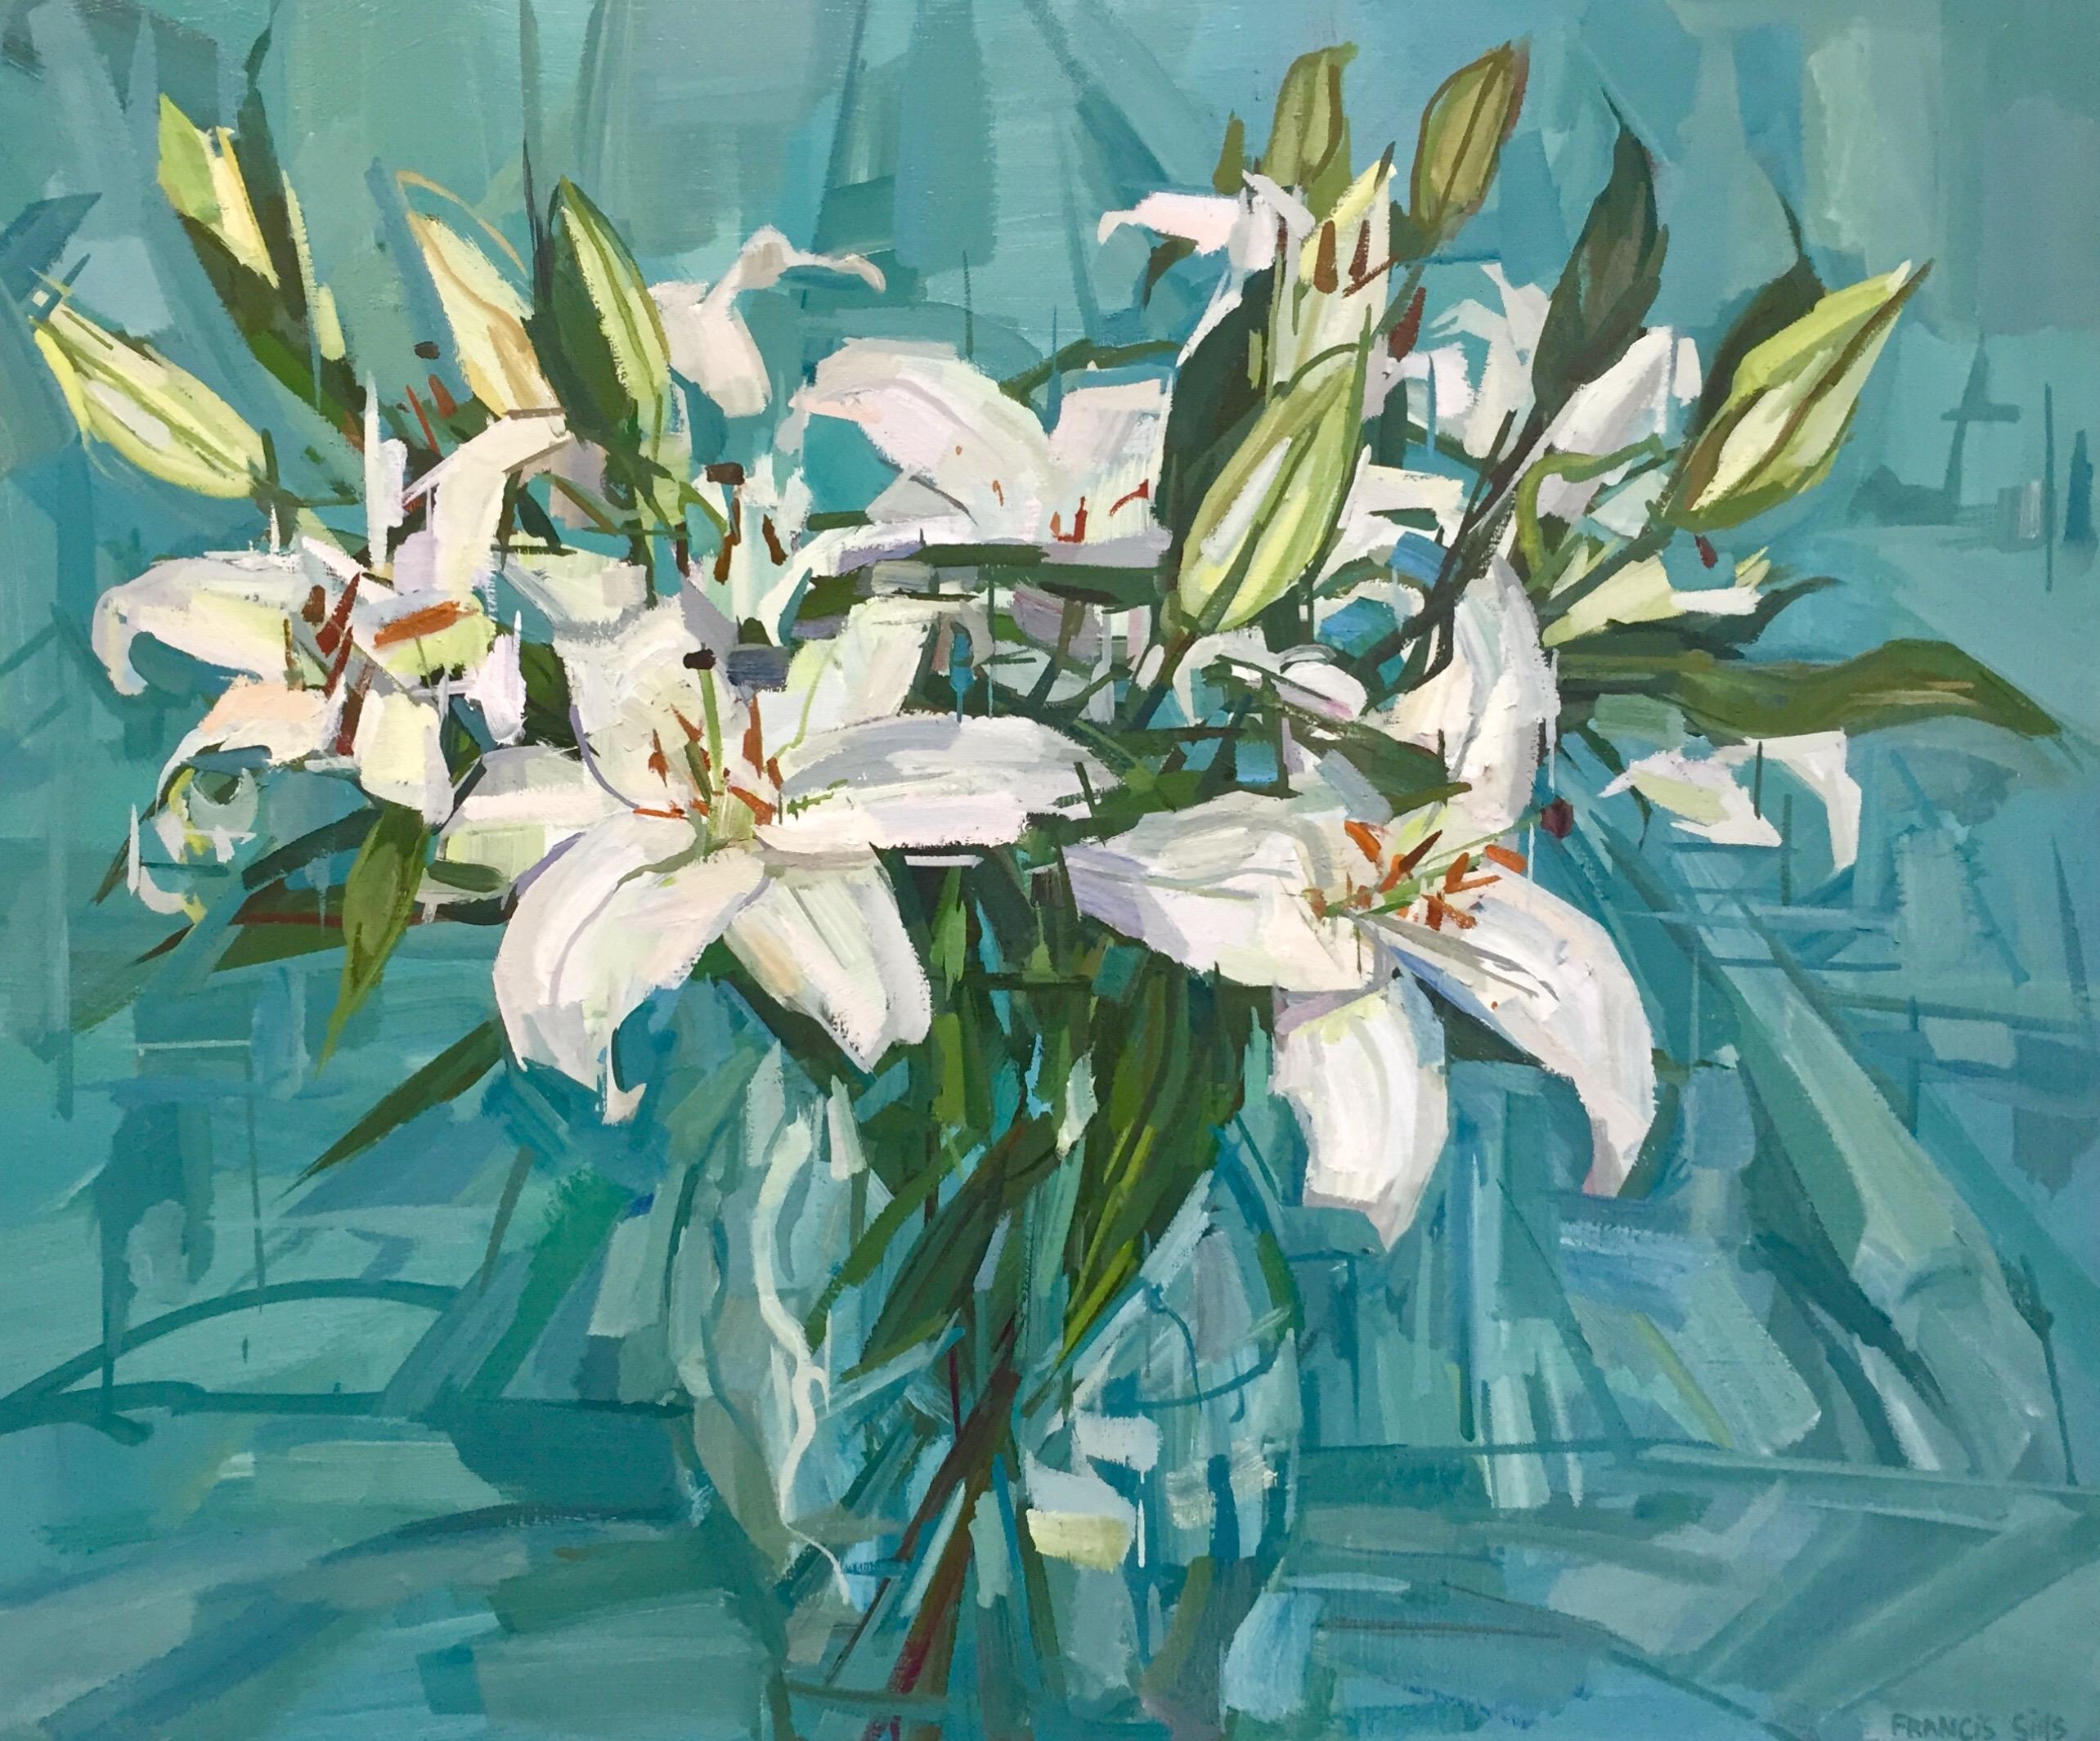 White Lilies, Flowers in Vase, Teal Blue, Green, White Botanical Still Life